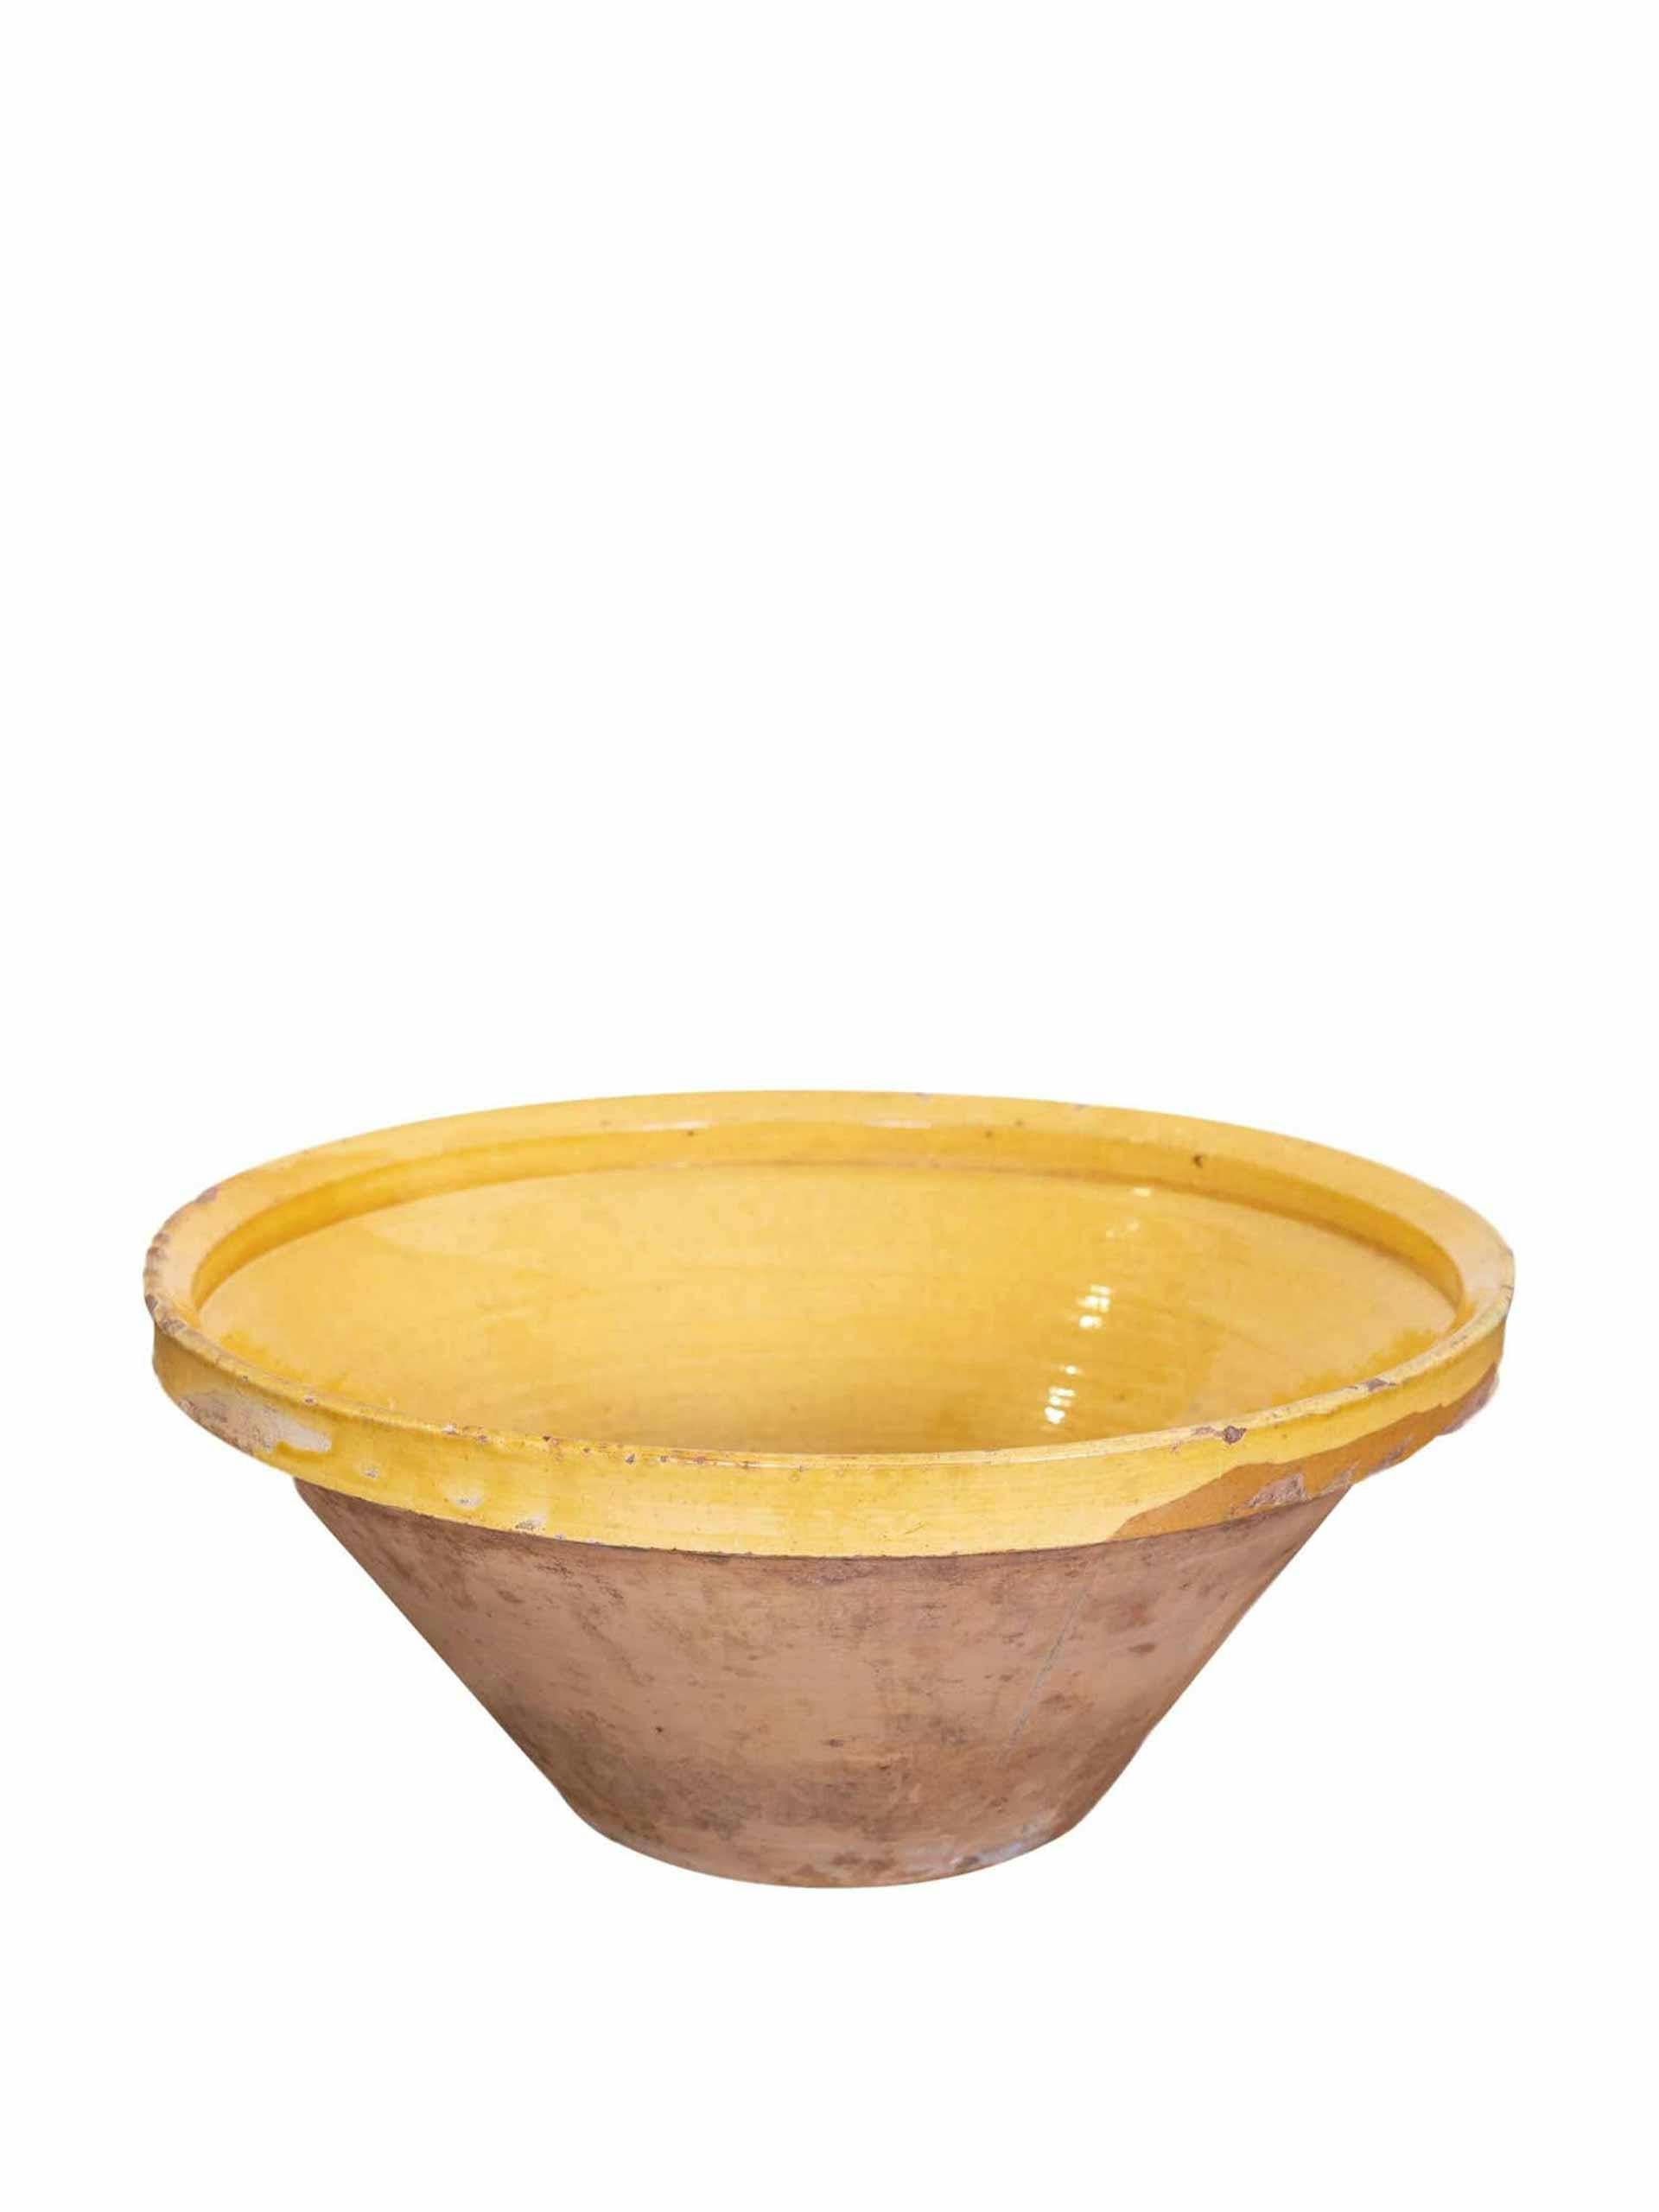 Terracotta bowl with yellow glaze